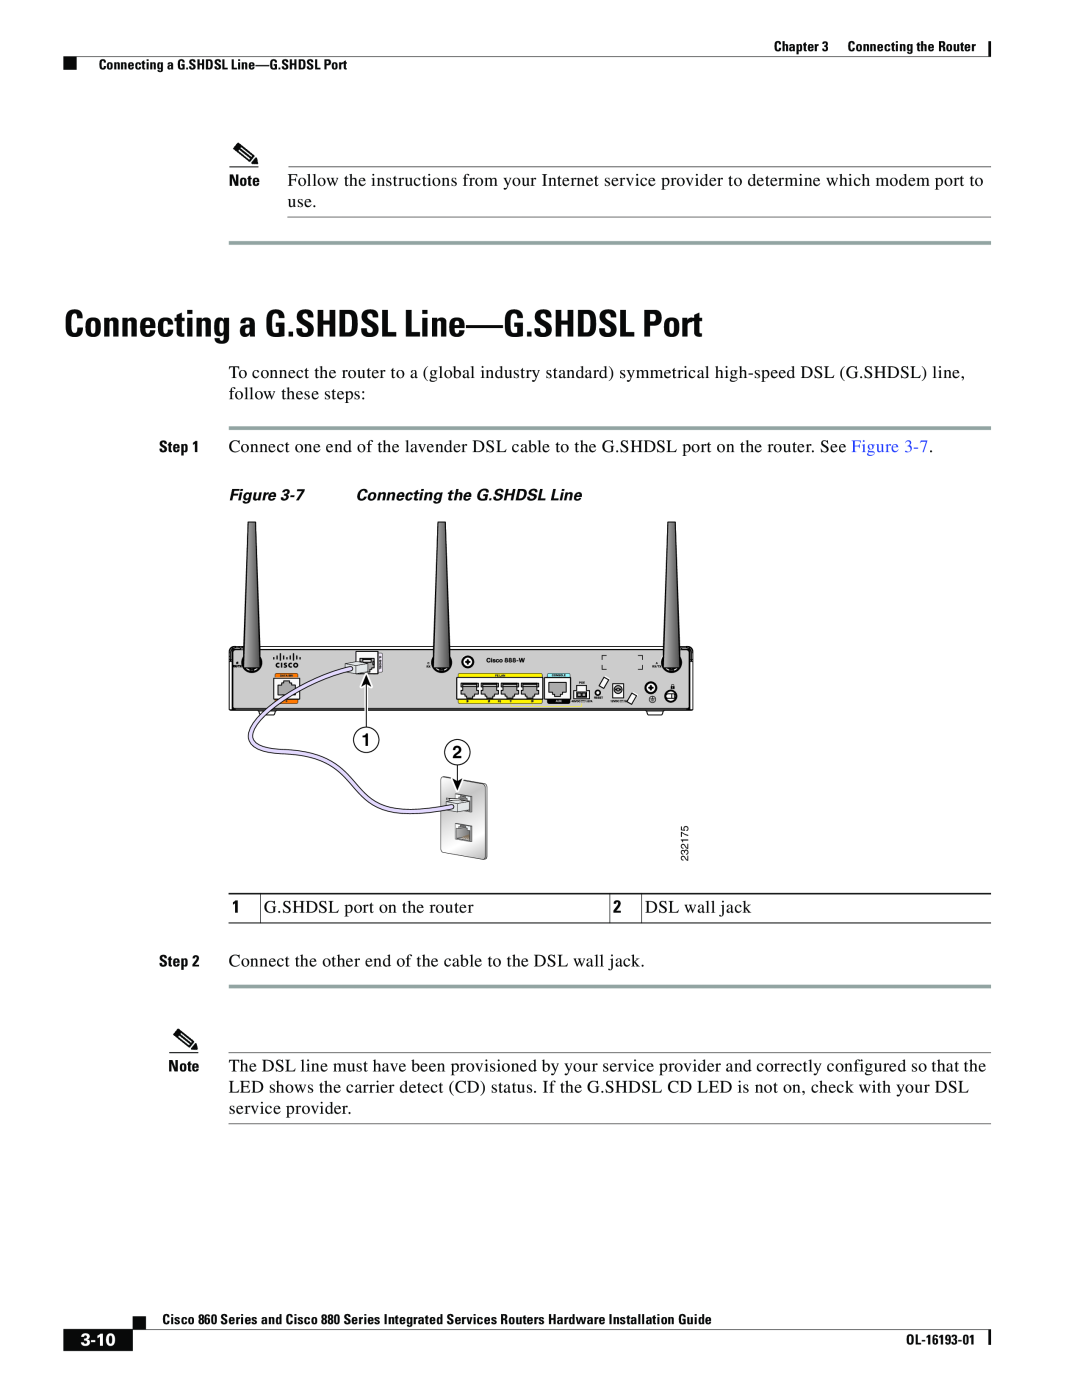 Cisco Systems 861WGNPK9RF, HIG880, C892FSPK9, 860 manual Connecting a G.SHDSL Line-G.SHDSL Port, 3-10 